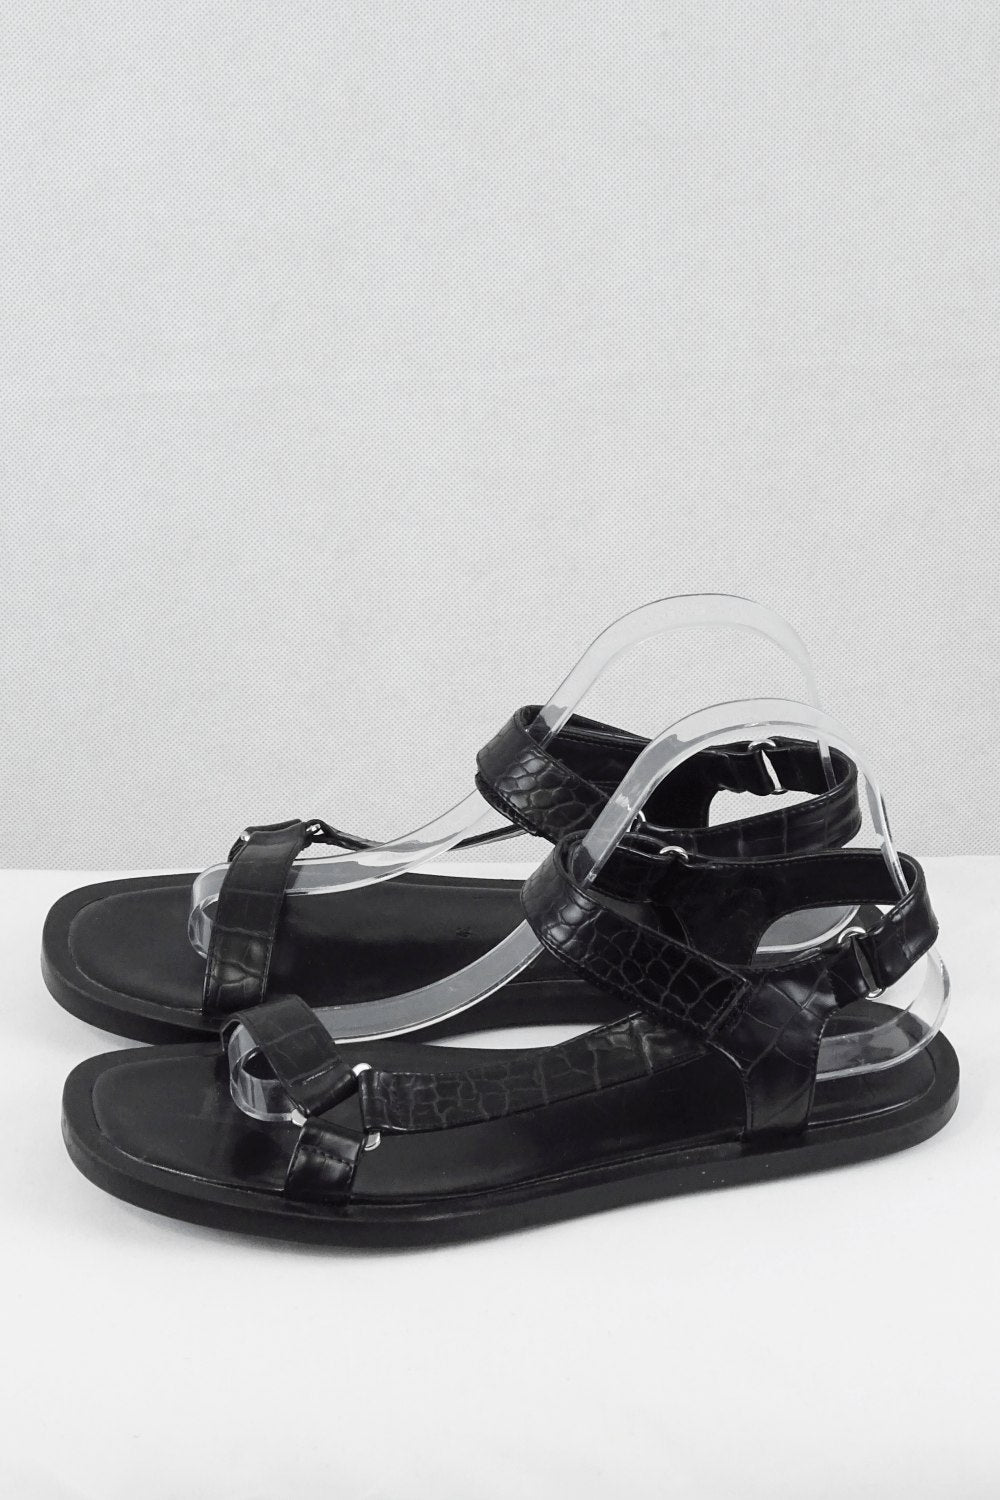 Zara Black Sandals 39